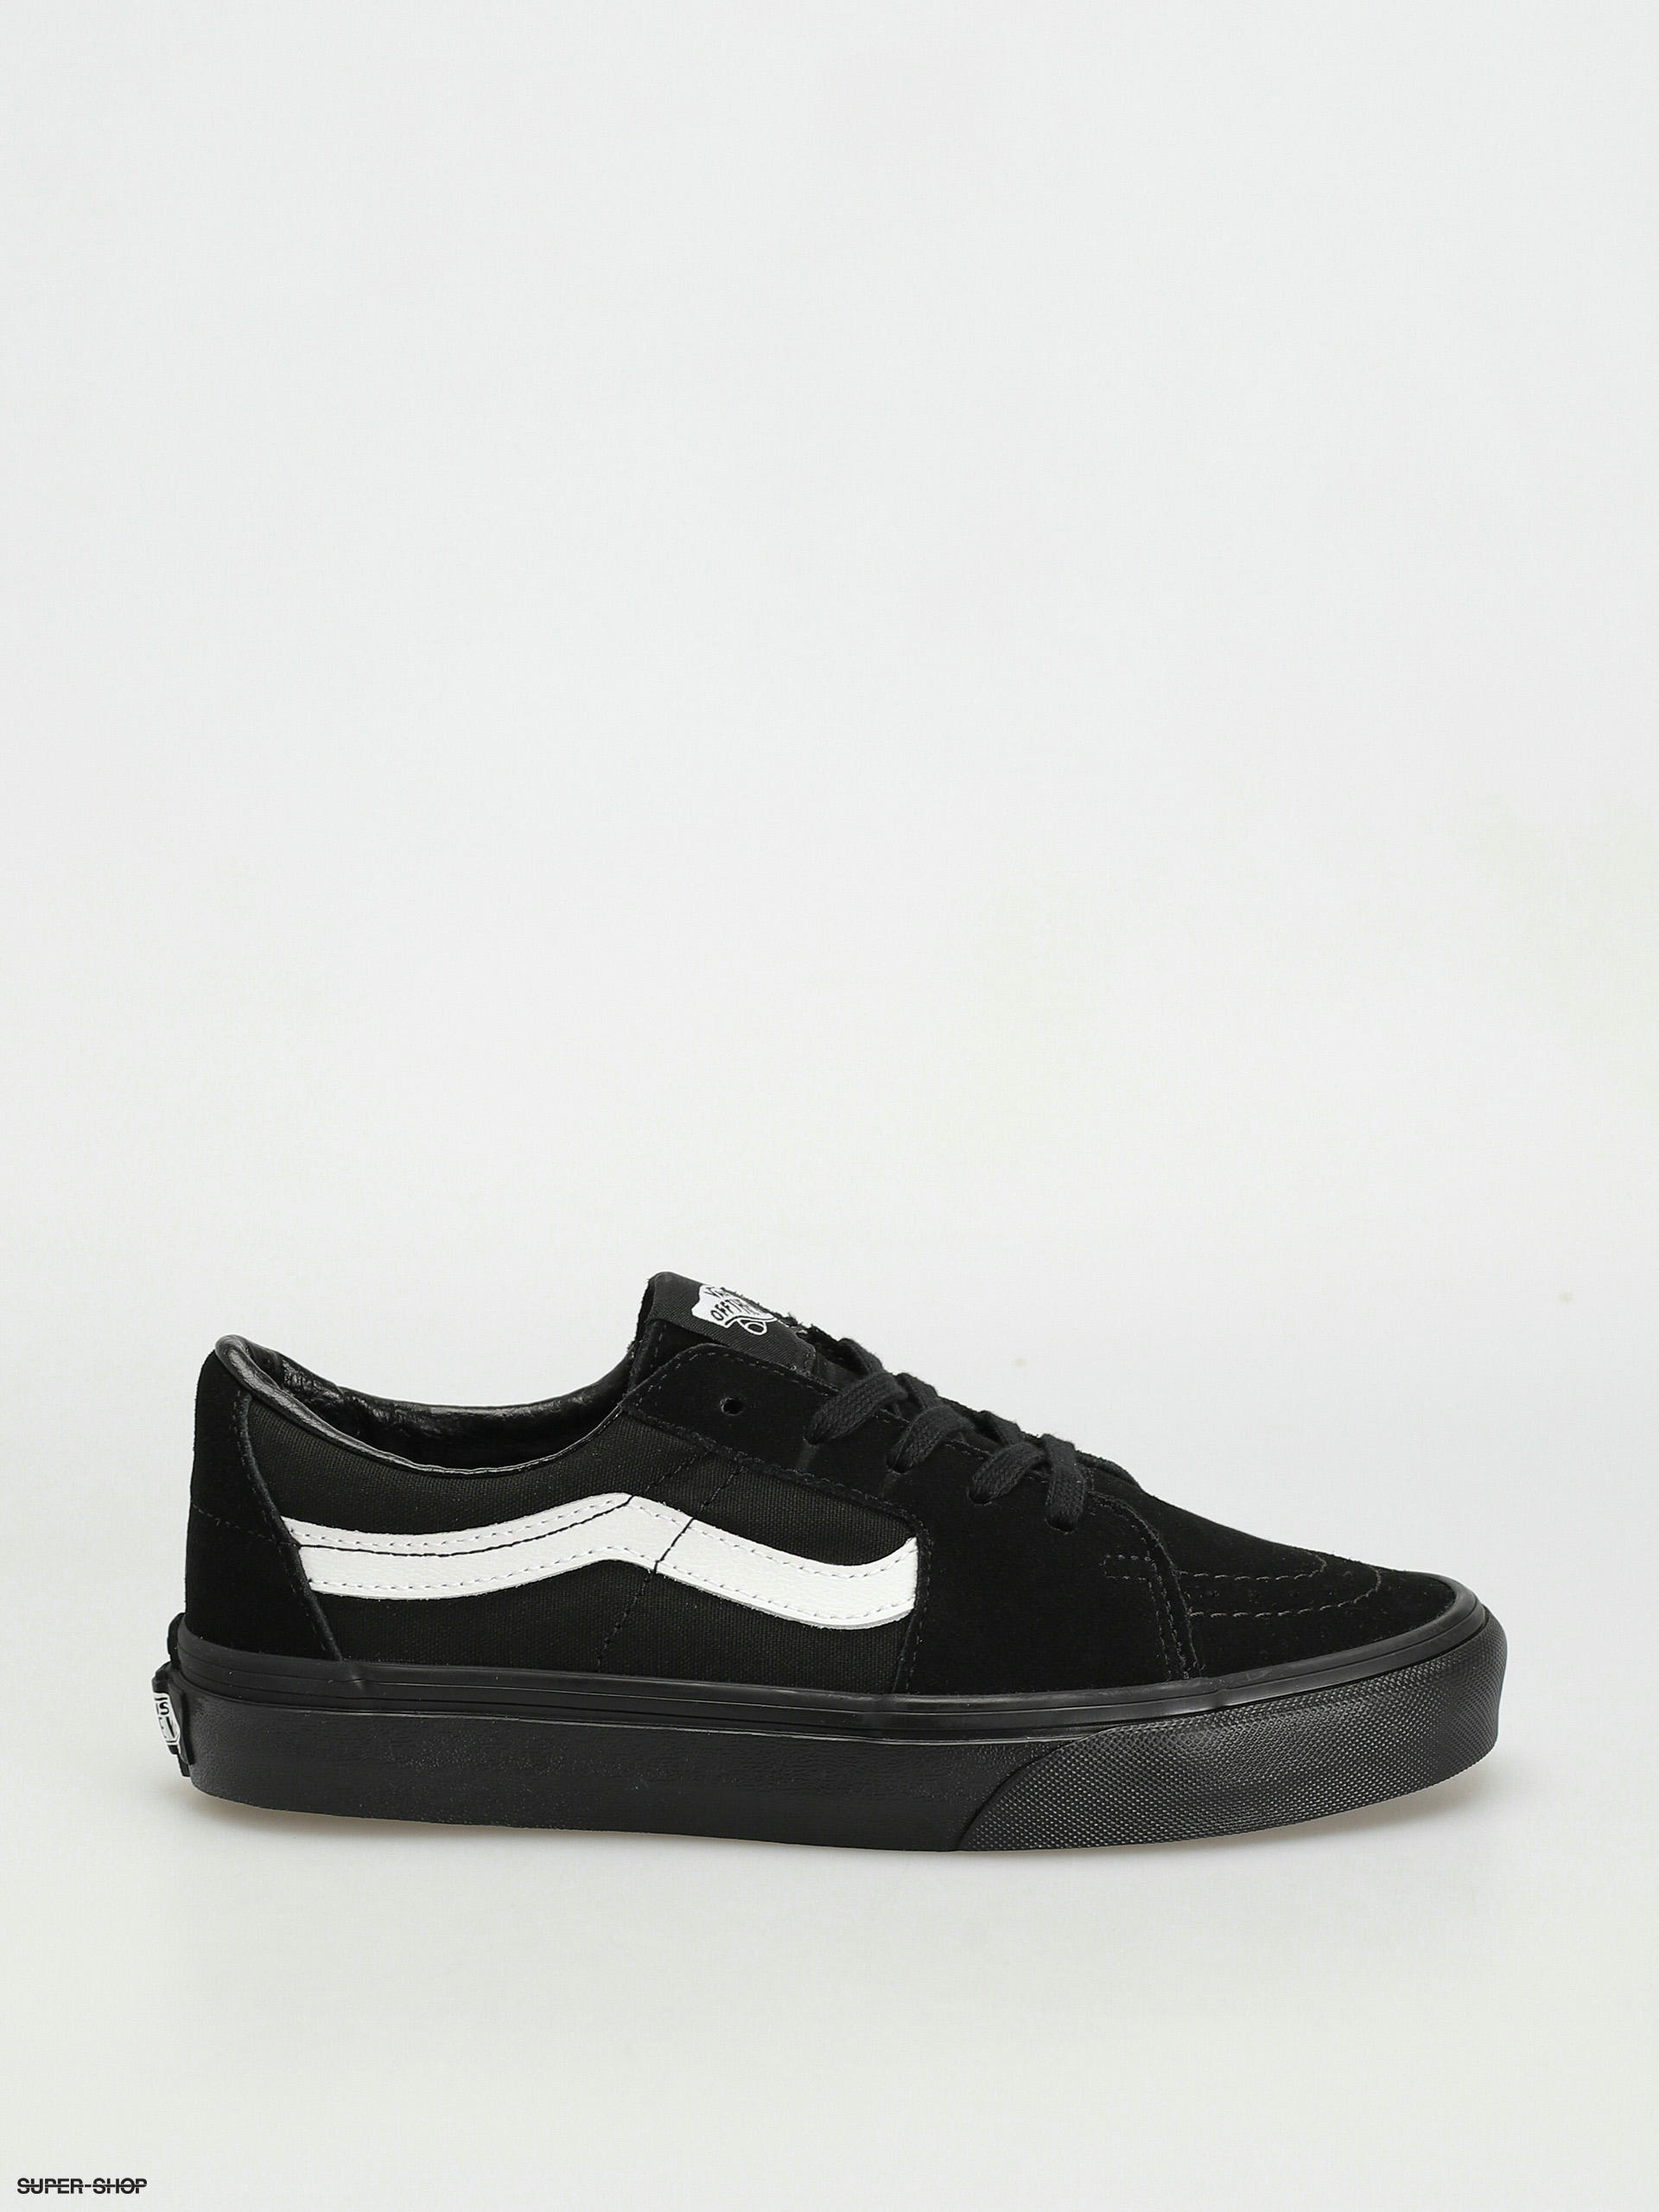 Vans Low (contrast black/white) Schuhe Sk8